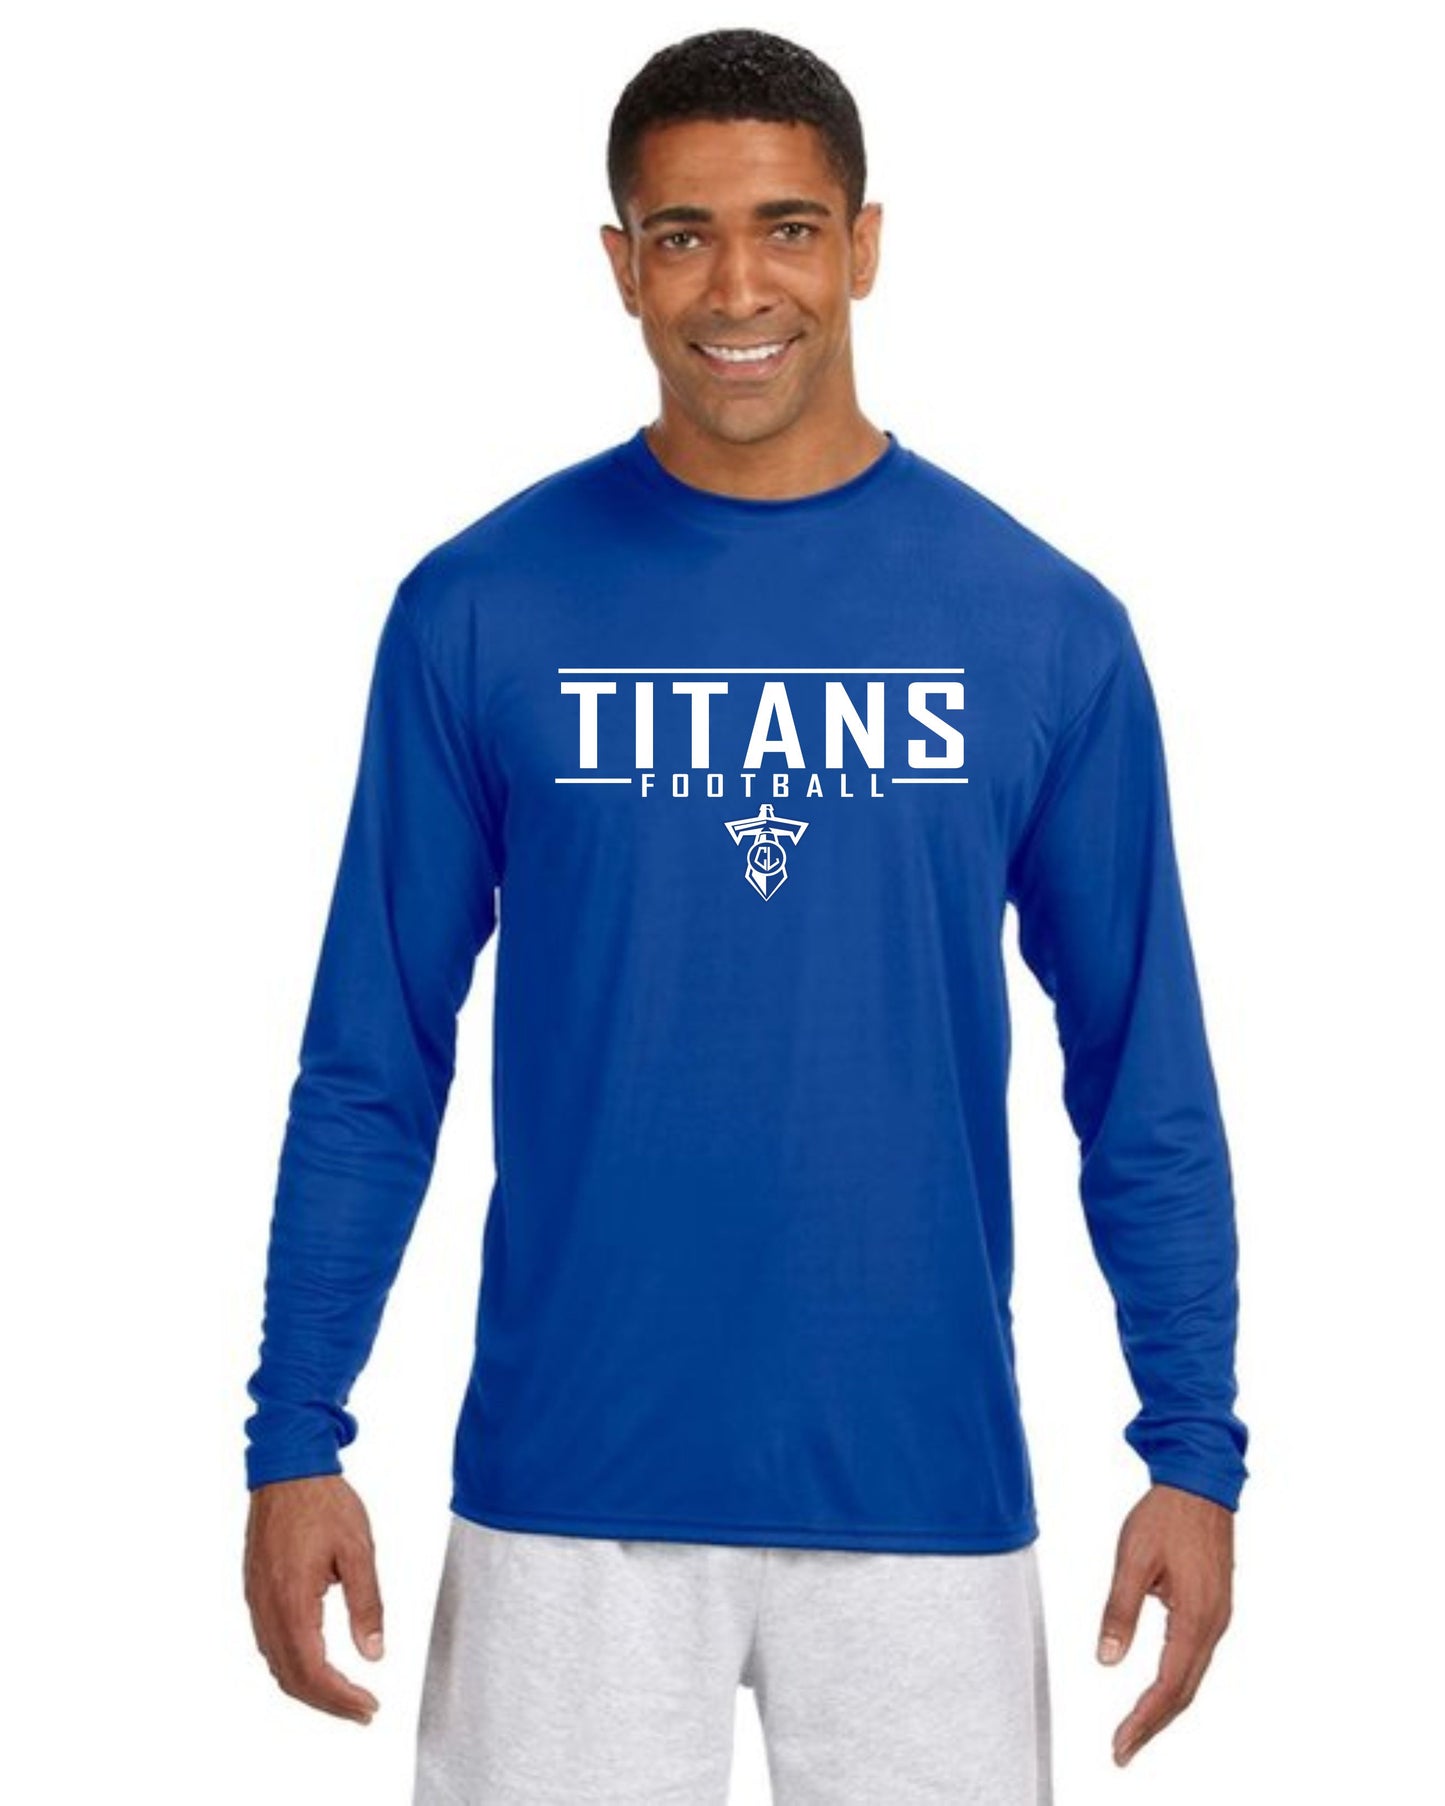 Titans Football T-Shirt